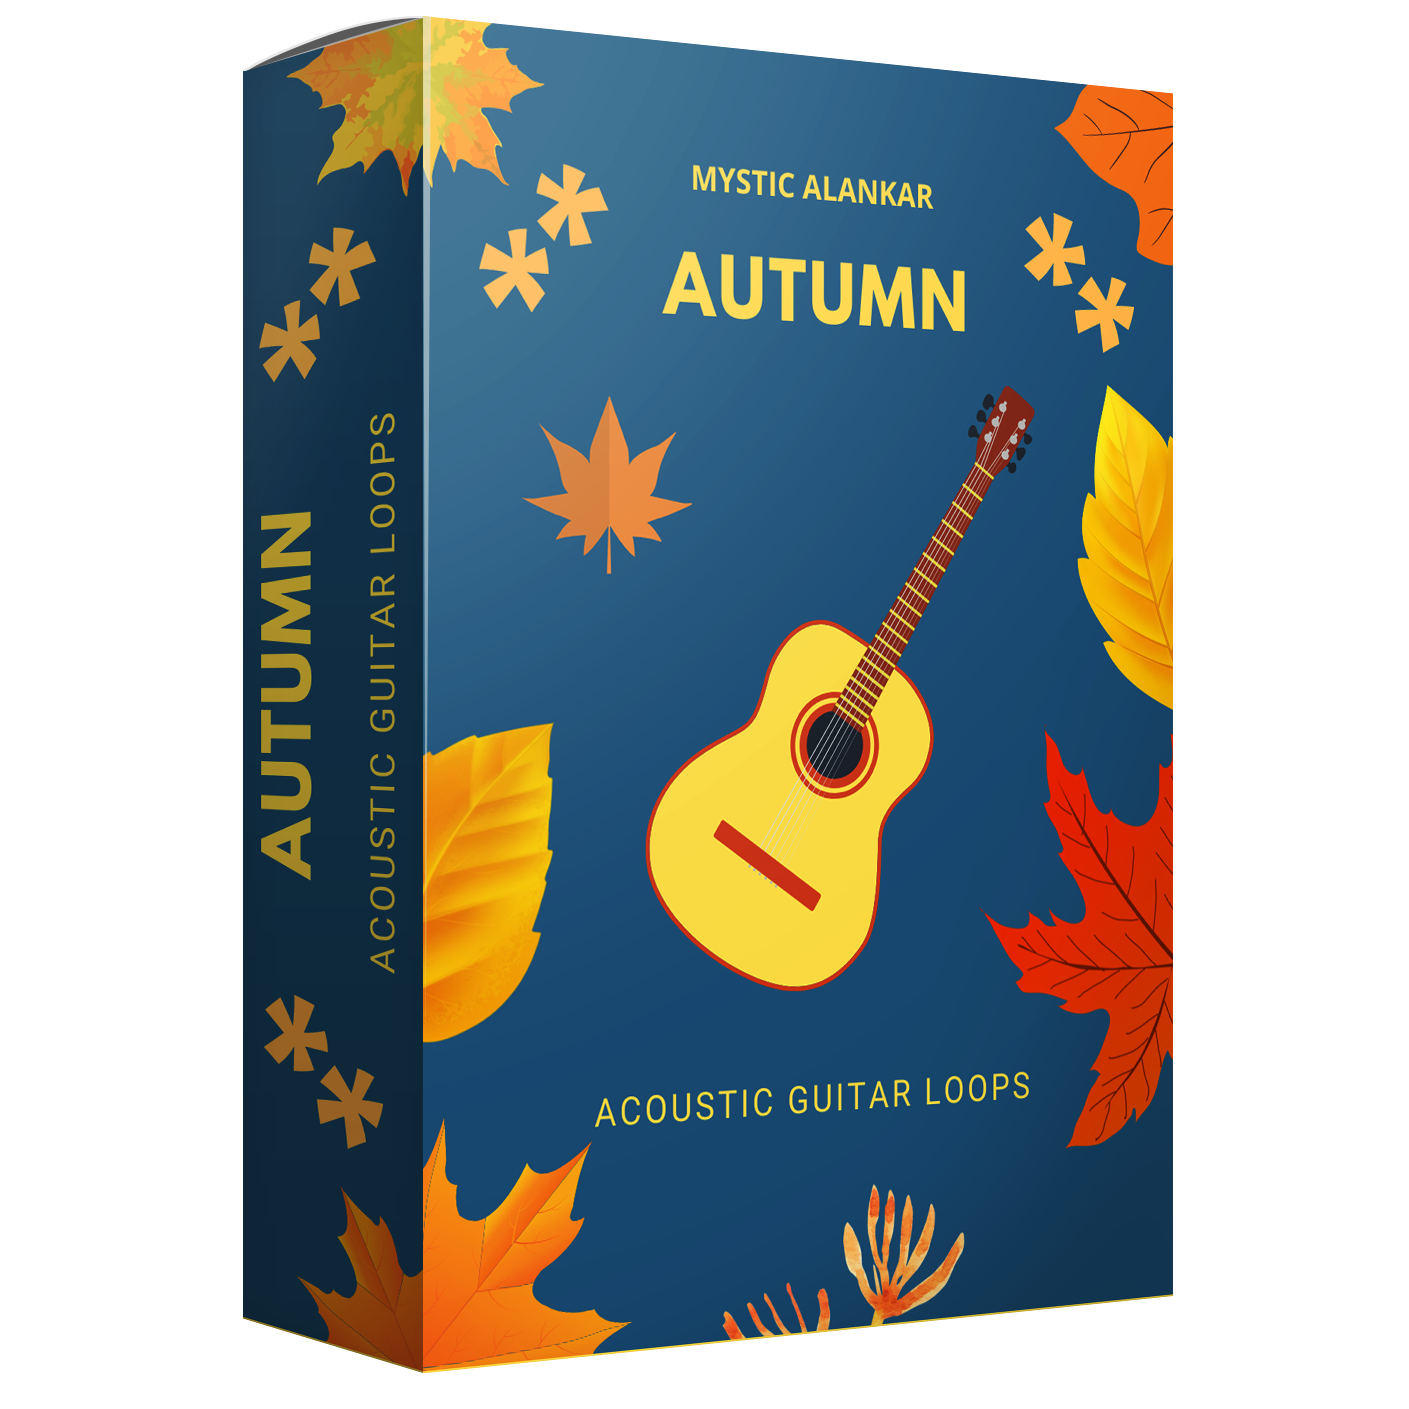 Autumn - Acoustic Guitar Loops